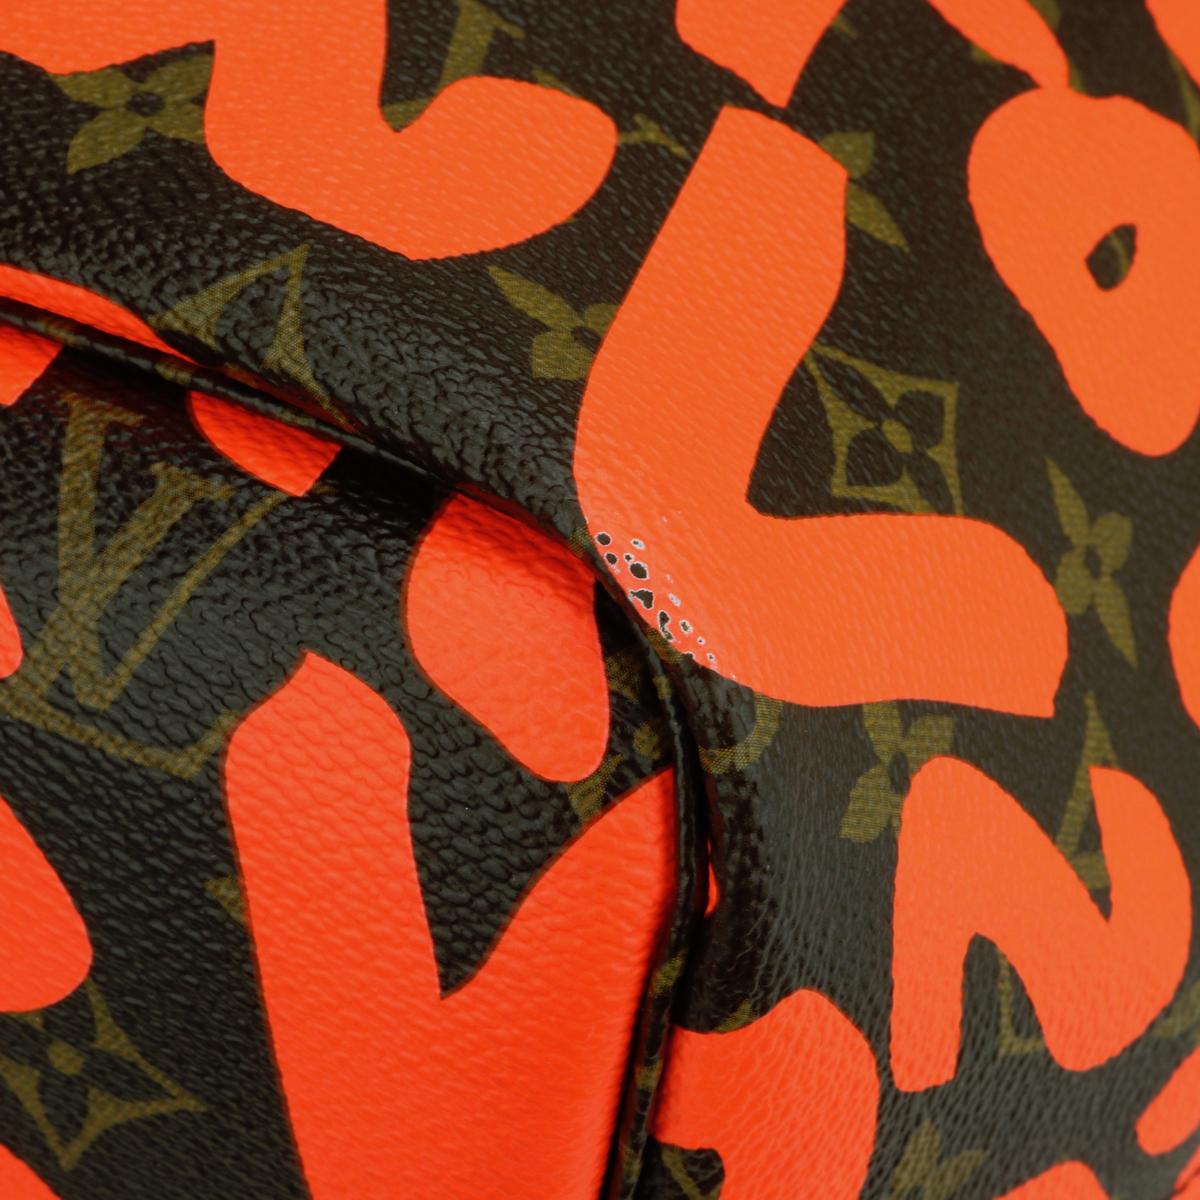 Louis Vuitton Neverfull GM Bag in Monogram Graffiti with Orange Interior 2009 6